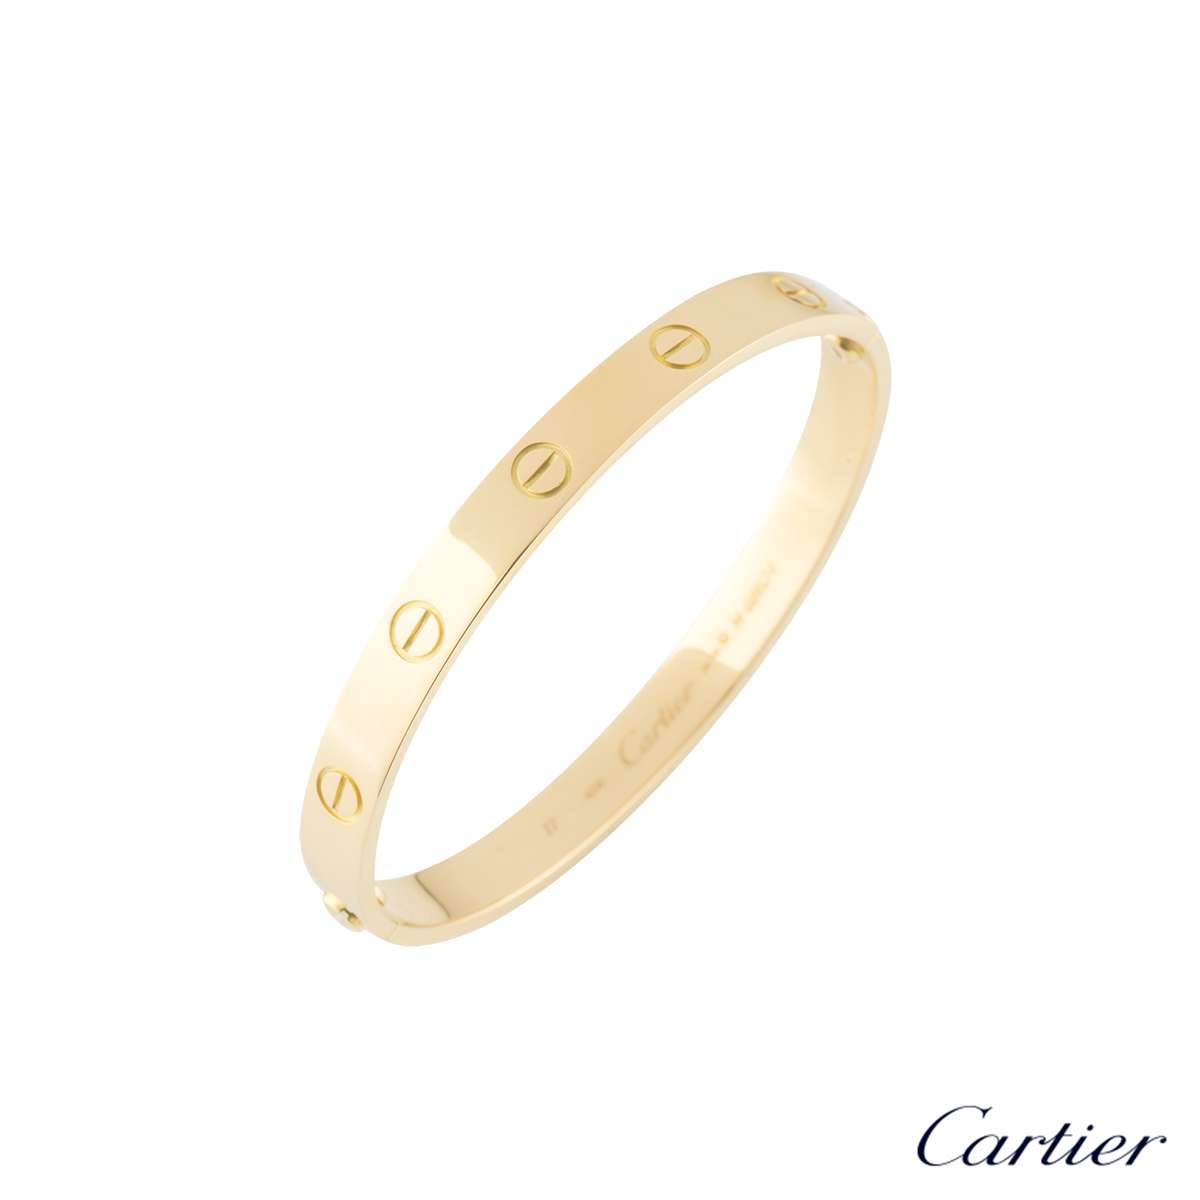 weight of cartier love bracelet size 16